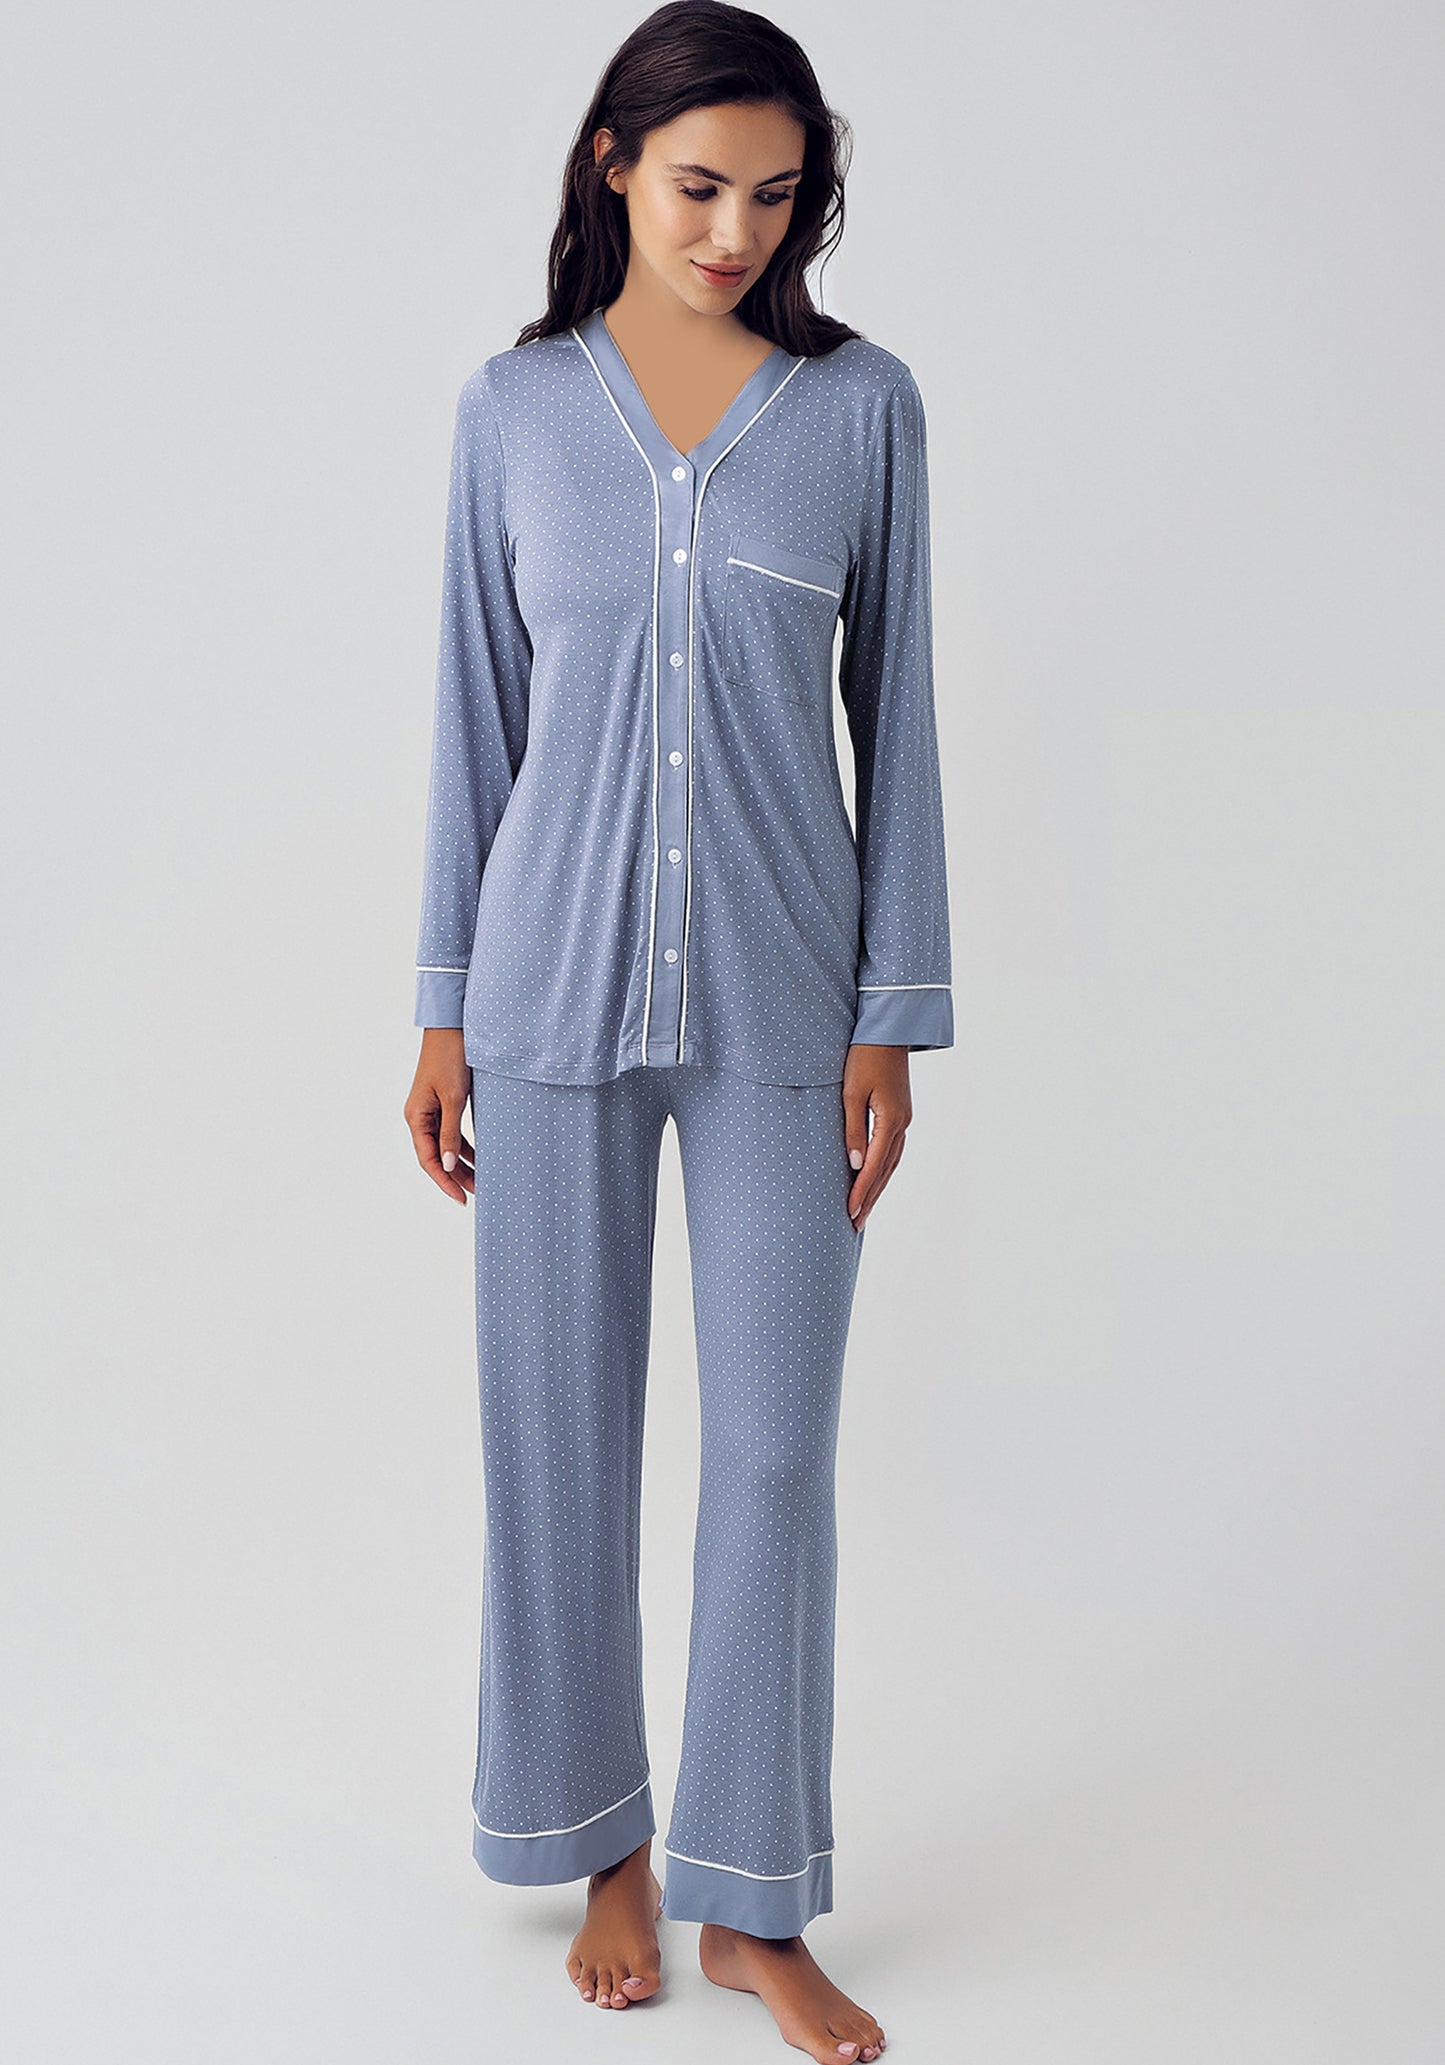 S&L Button Pajama Set